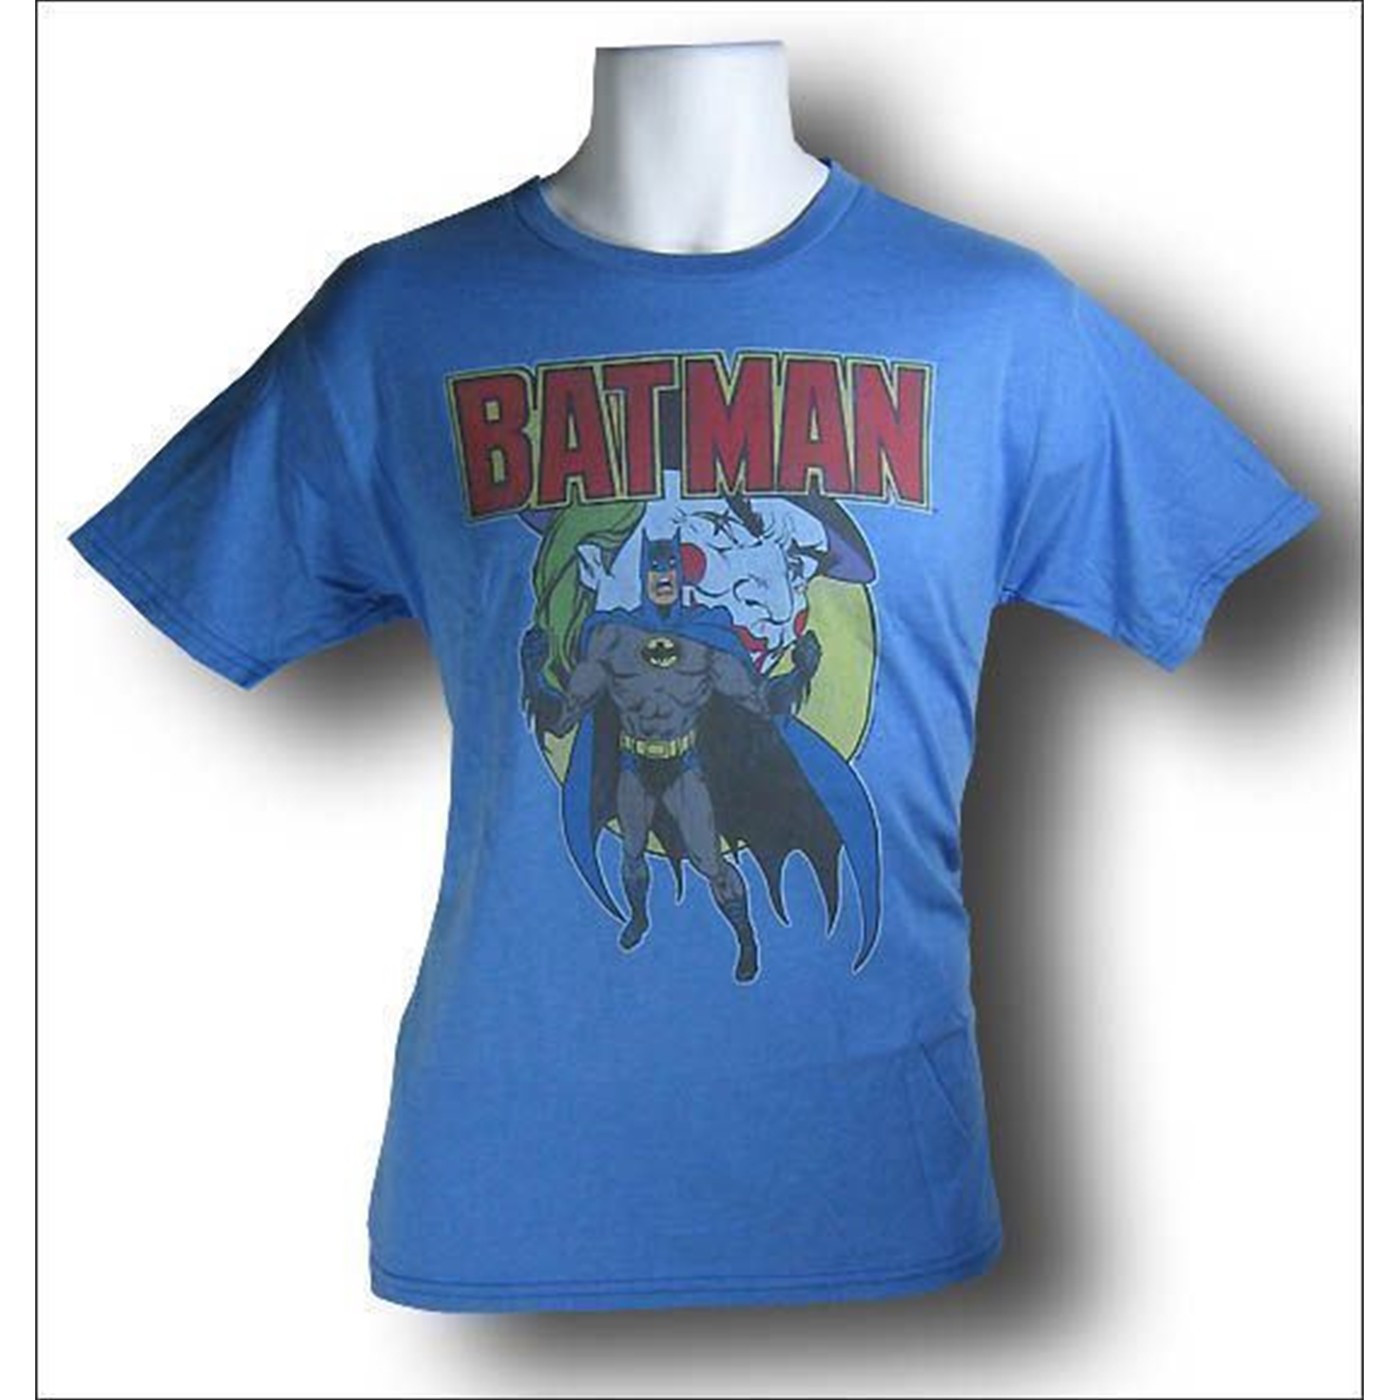 Batman Rage vs. Joker T-Shirt by Junk Food